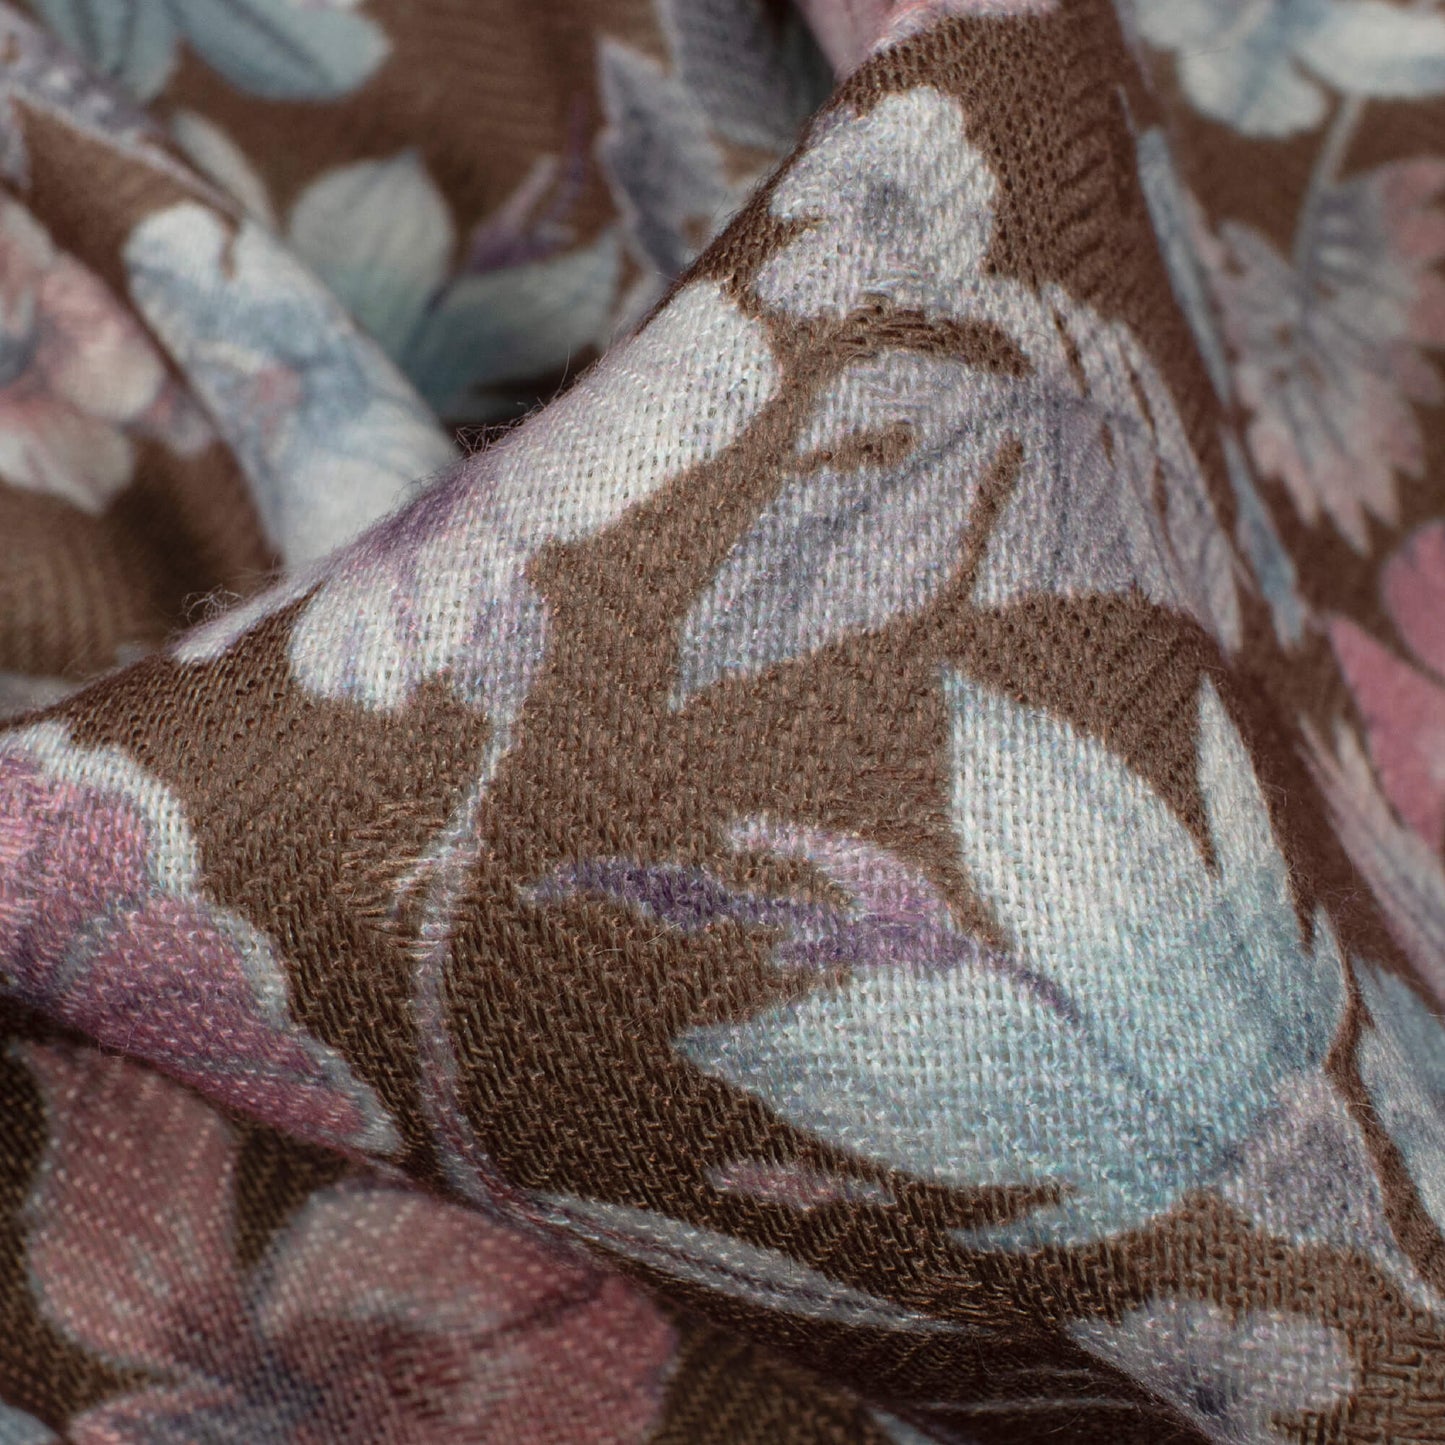 Umber Brown And Pink Floral Pattern Digital Print Elegant Blend Pashmina Fabric